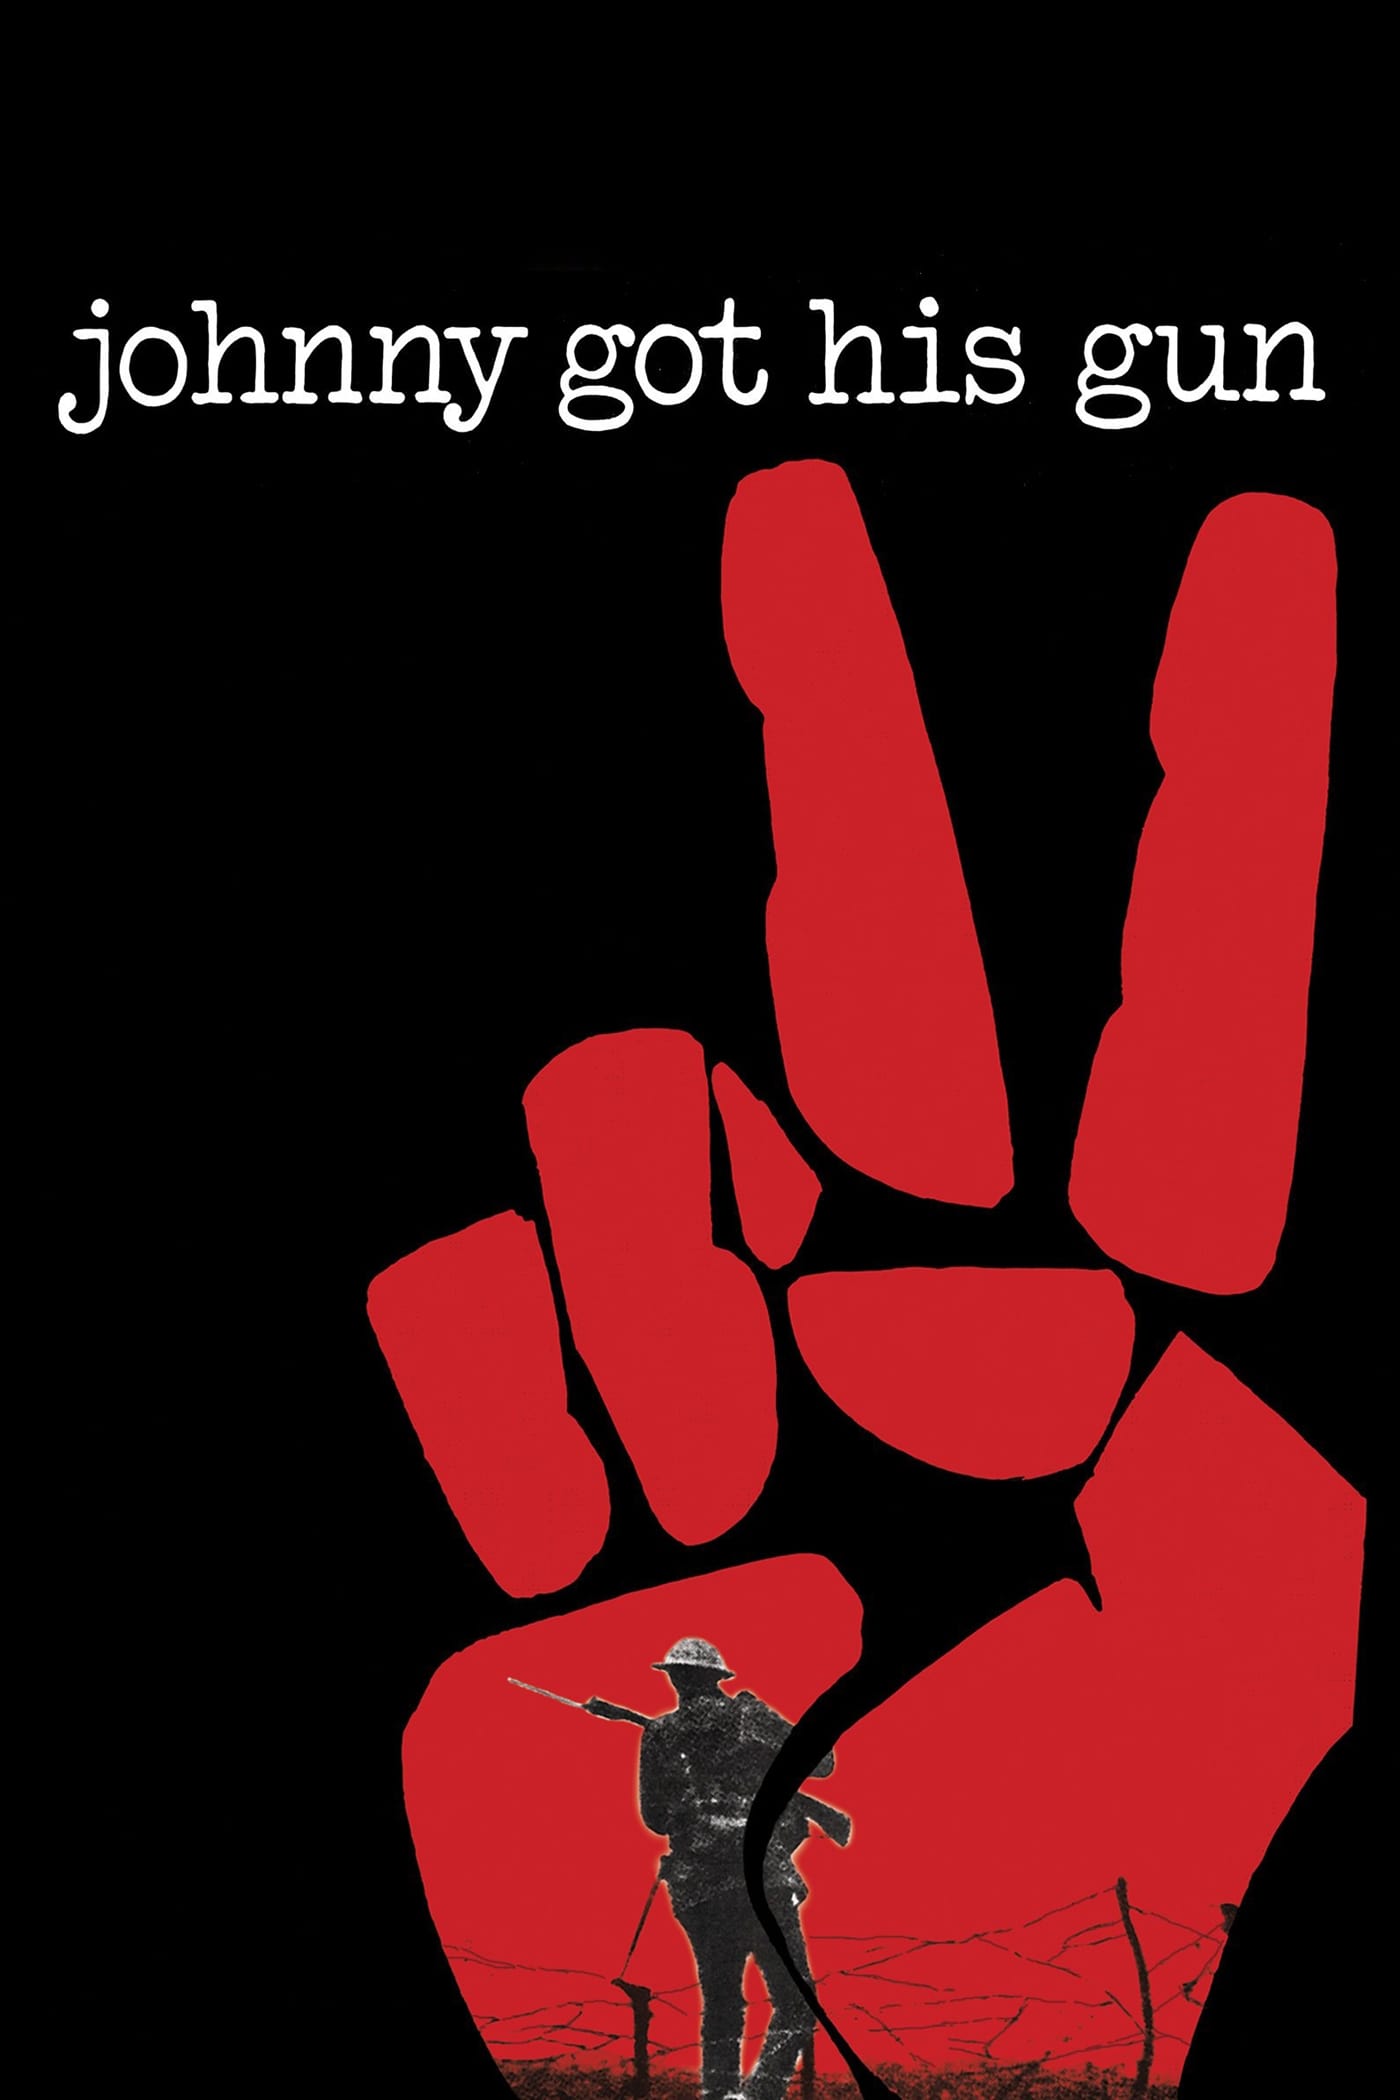 Johnny Got His Gun